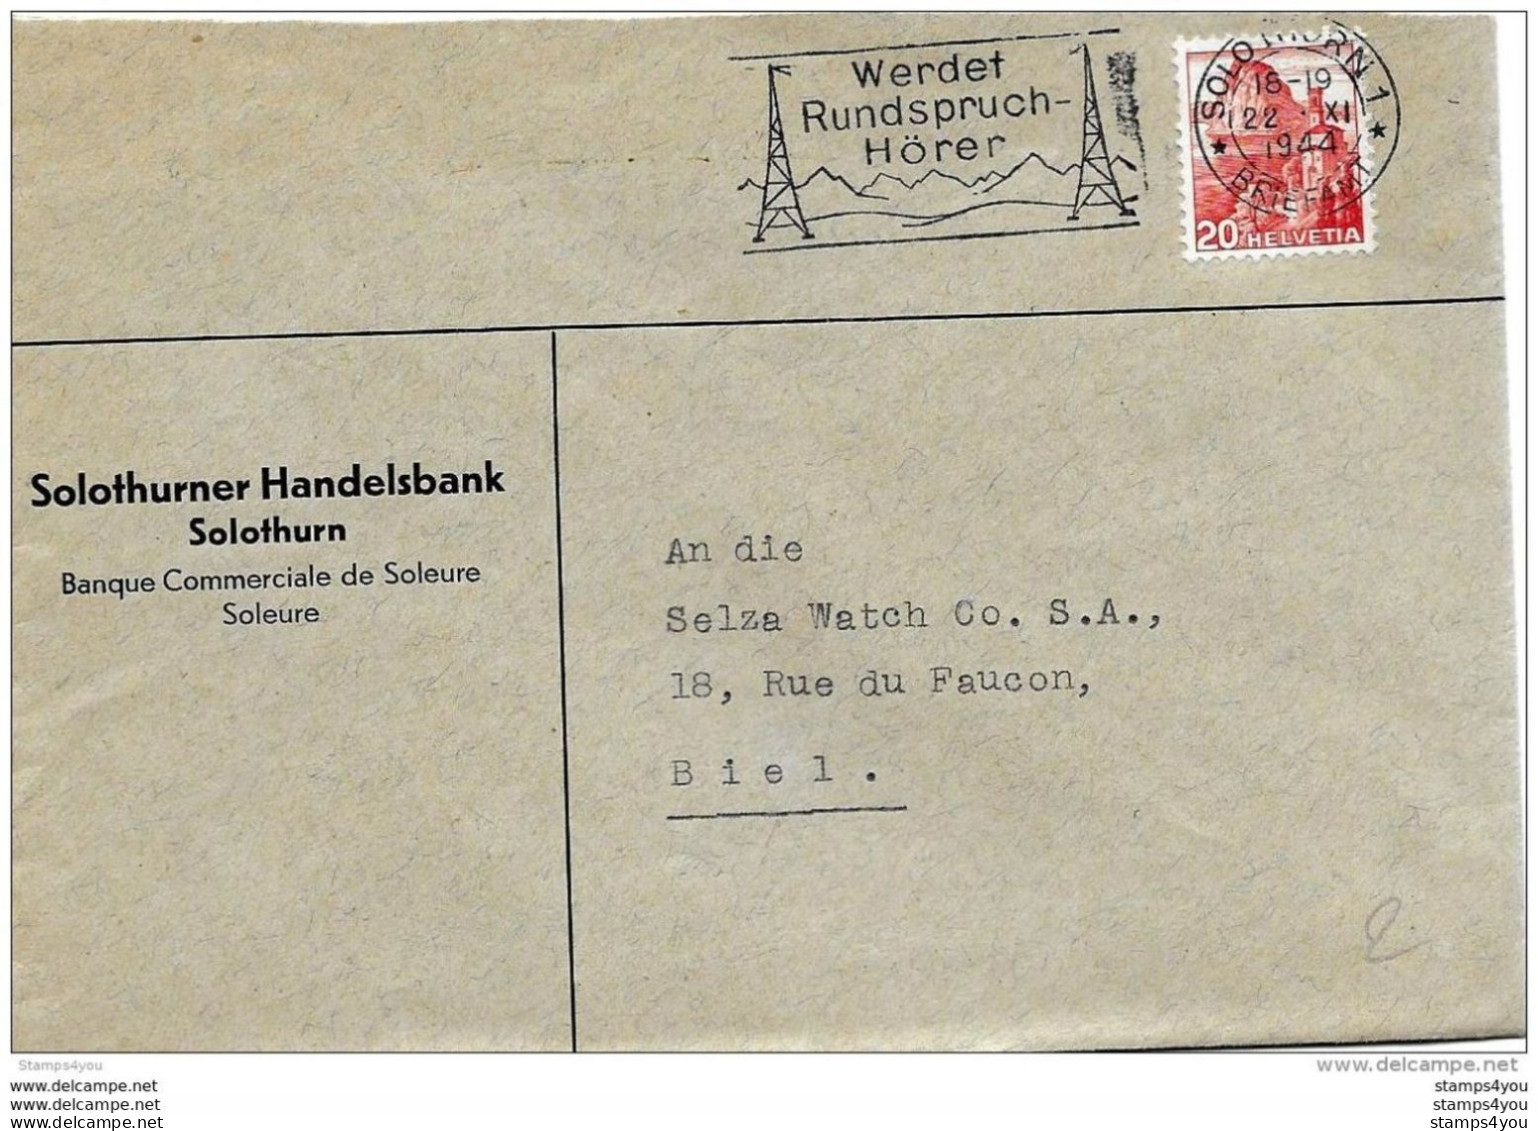 76 - 32 - Enveloppe Avec Oblit Mécanique "Werdet Rundspruch Hörer" 1944 - Marcofilie